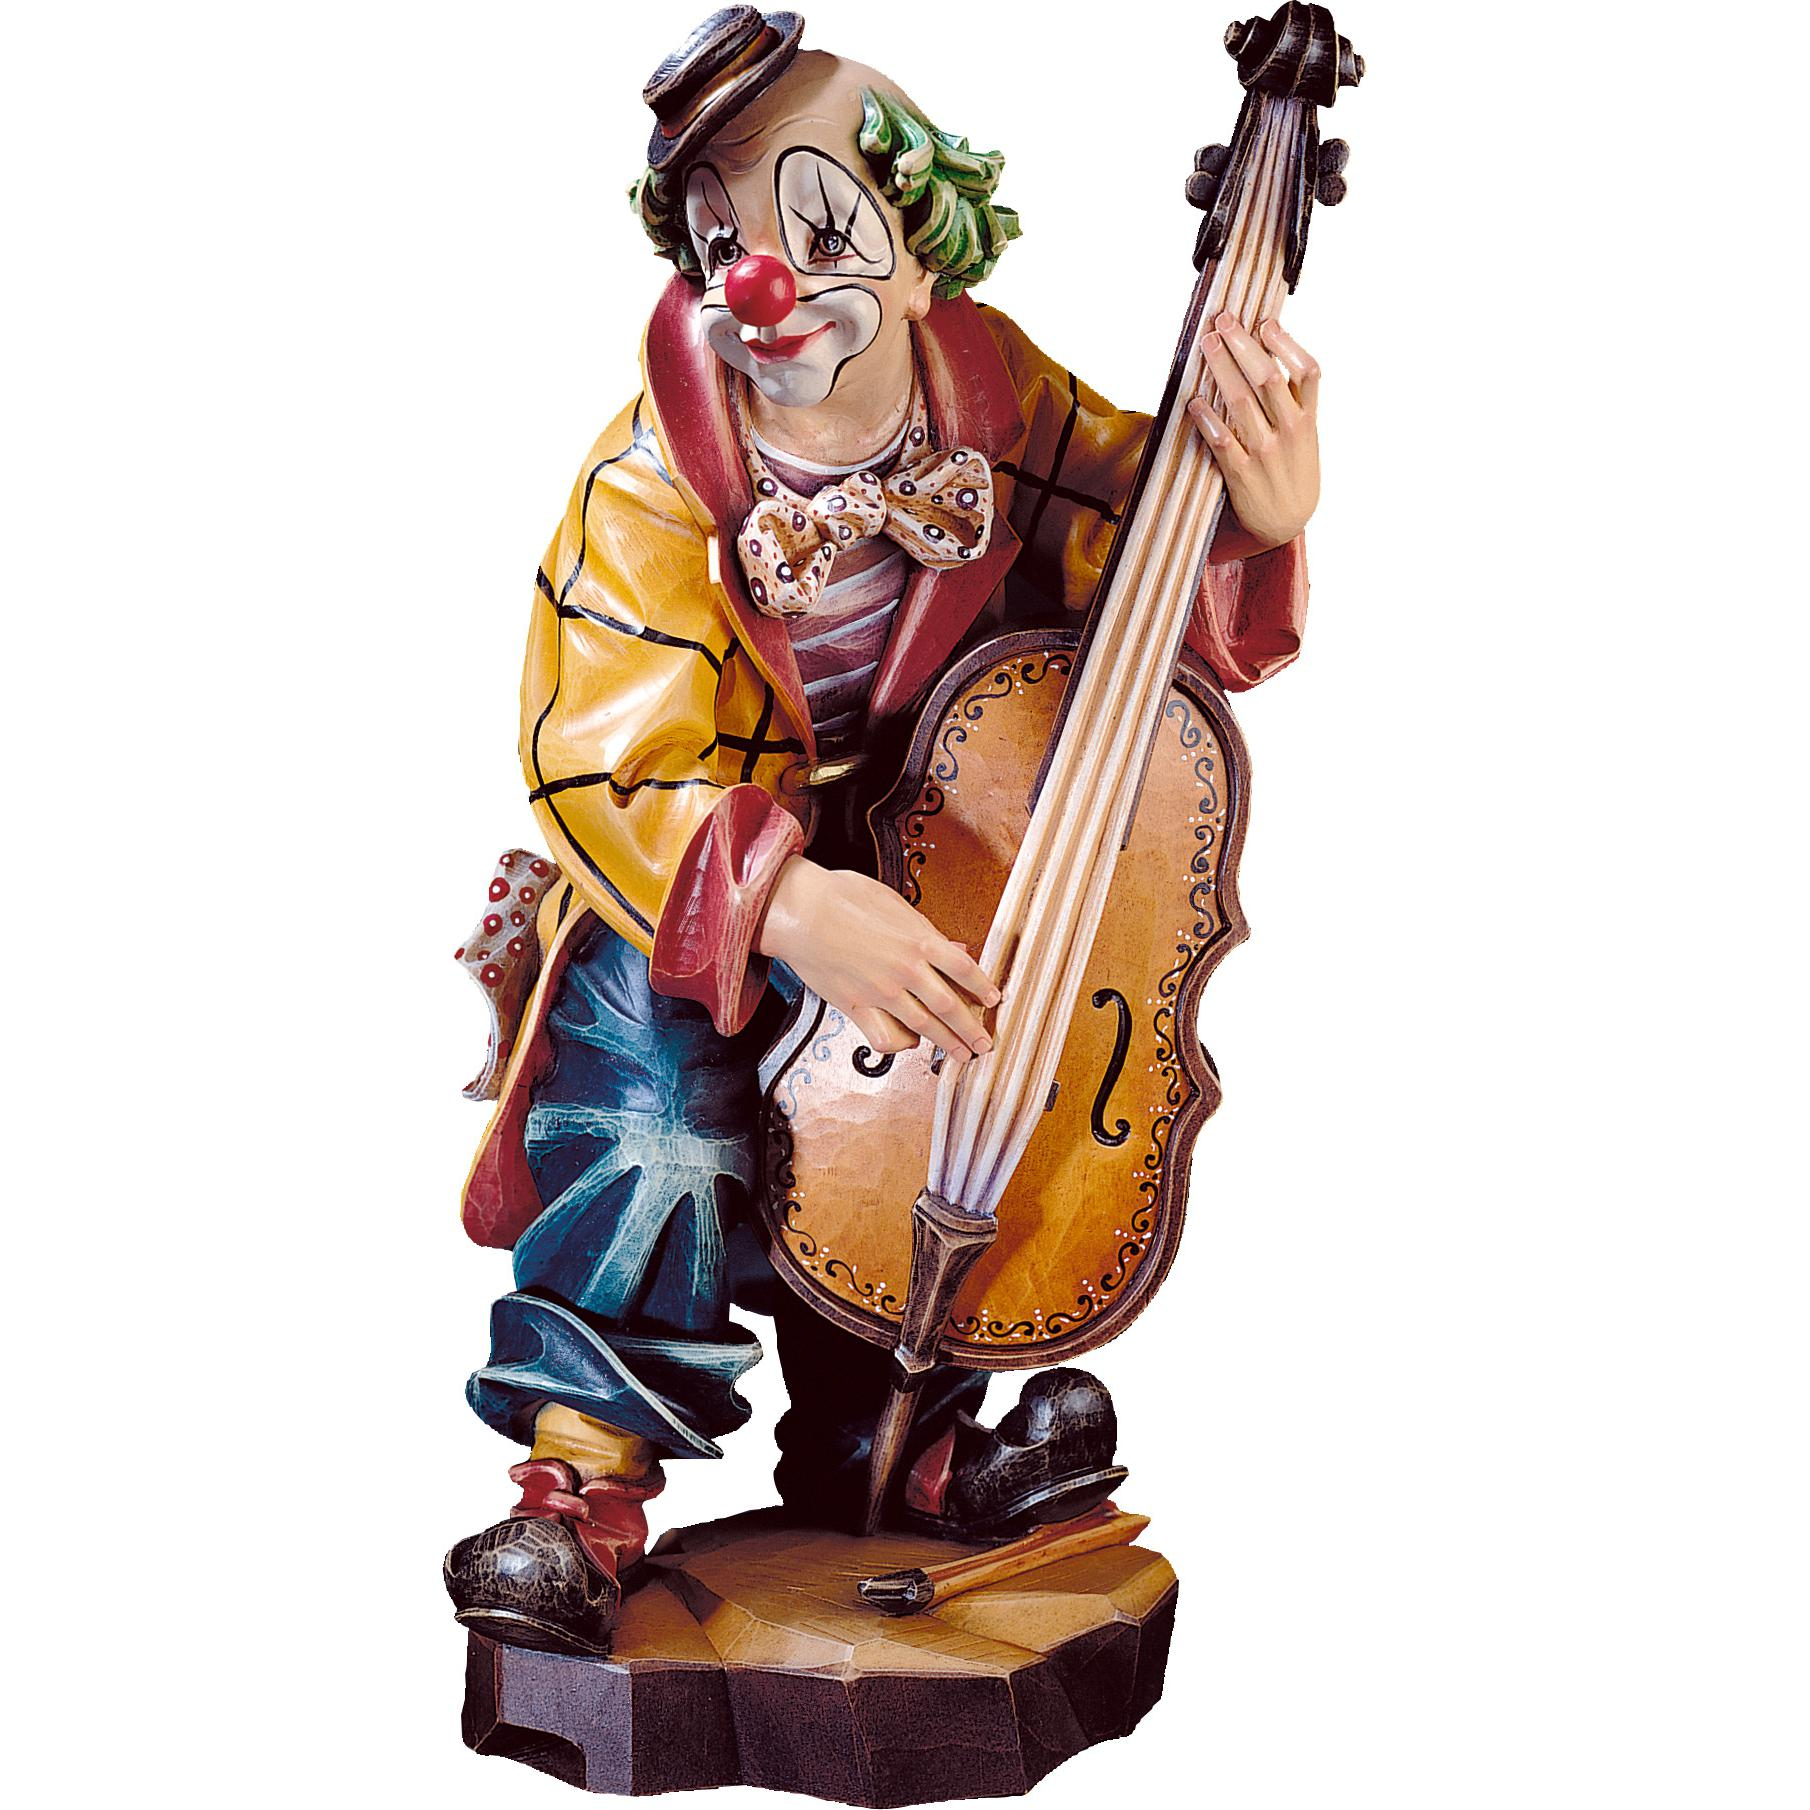 Clown bassist wooden statue